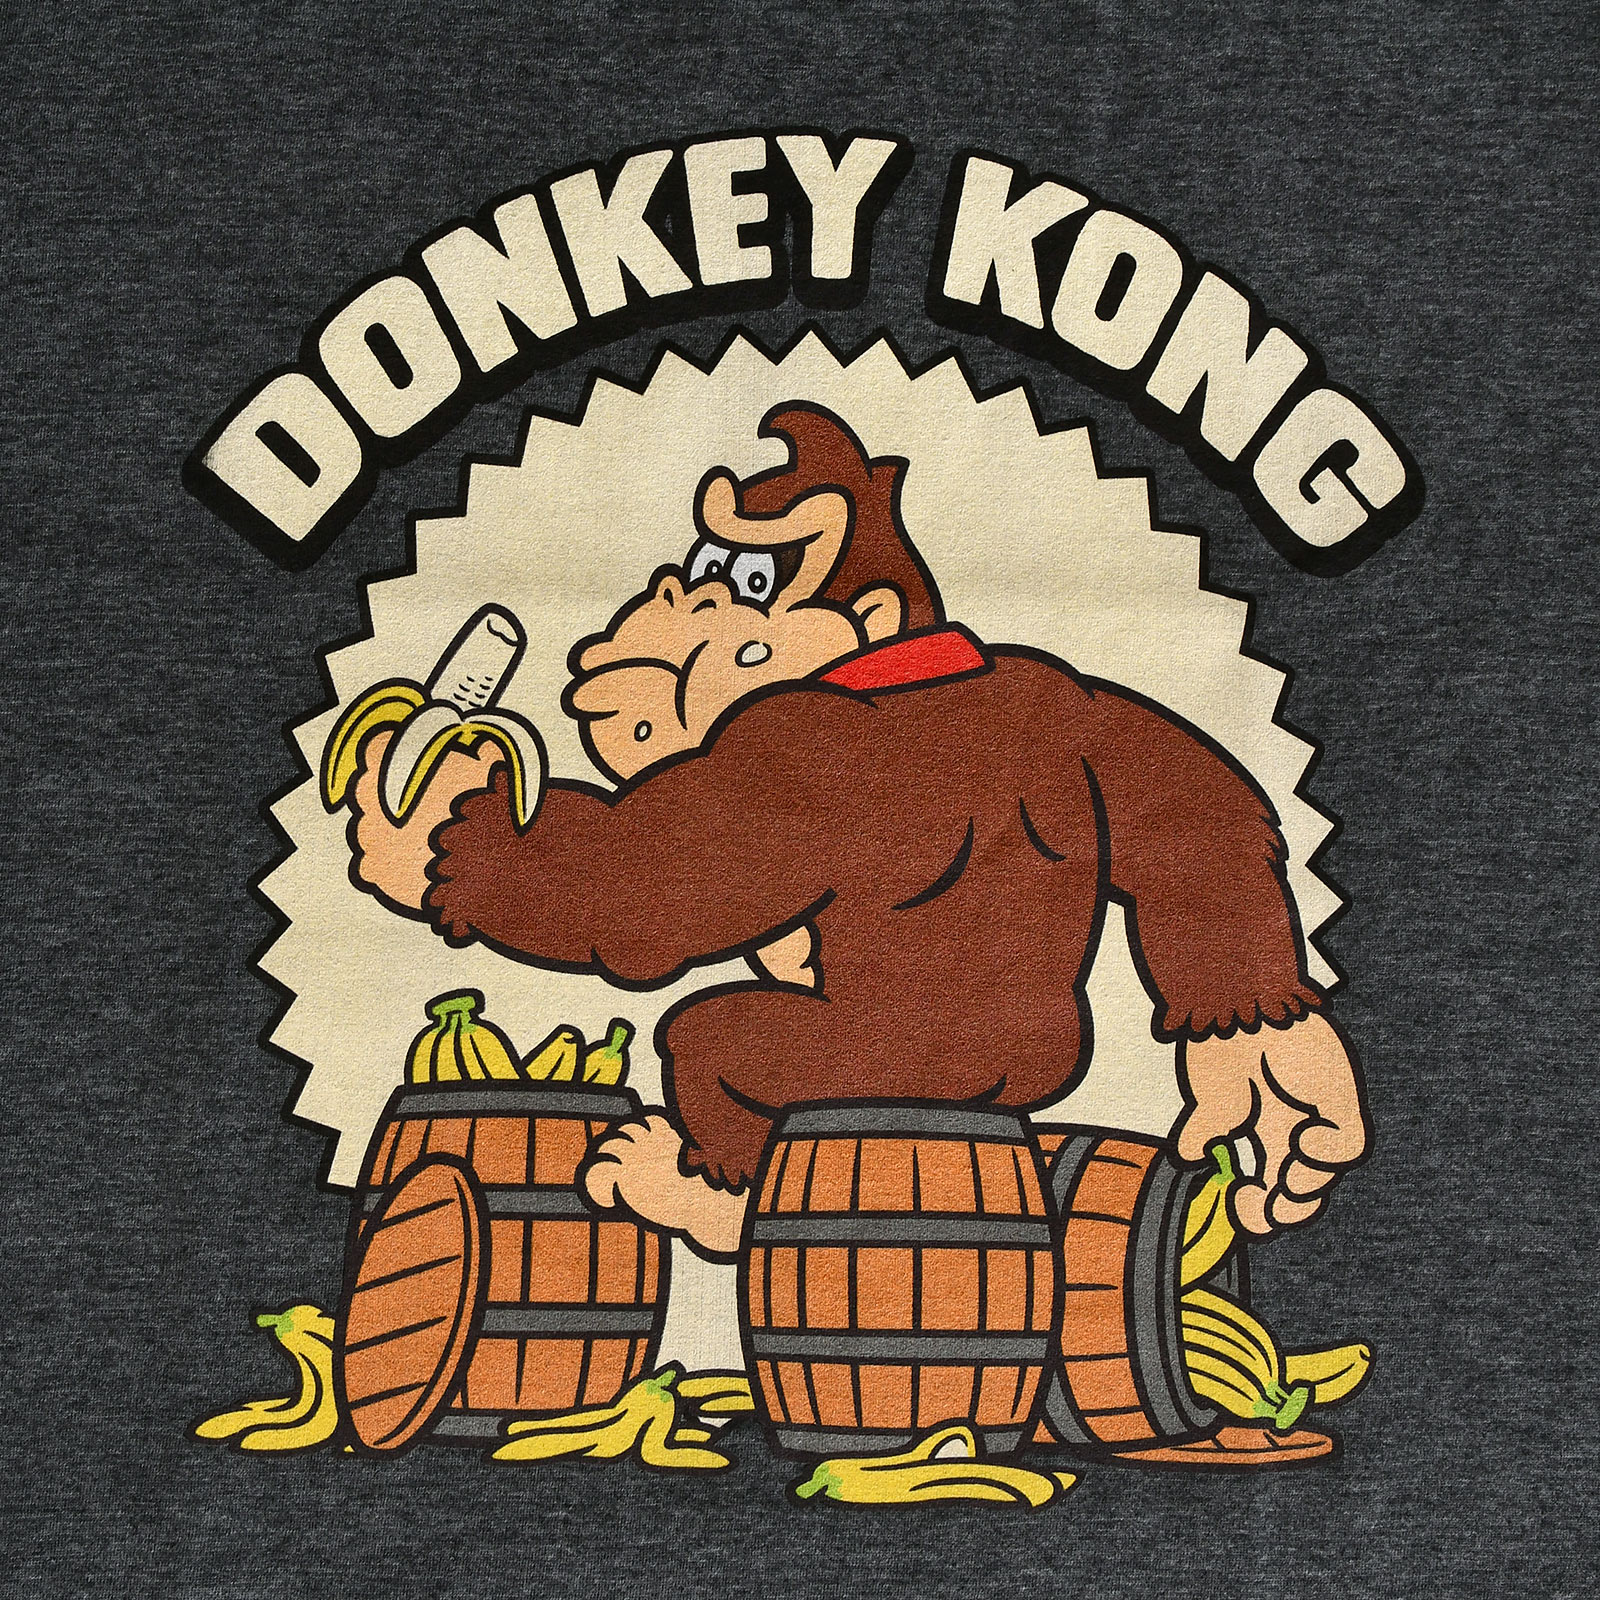 Donkey Kong - Bananas T-shirt Grijs